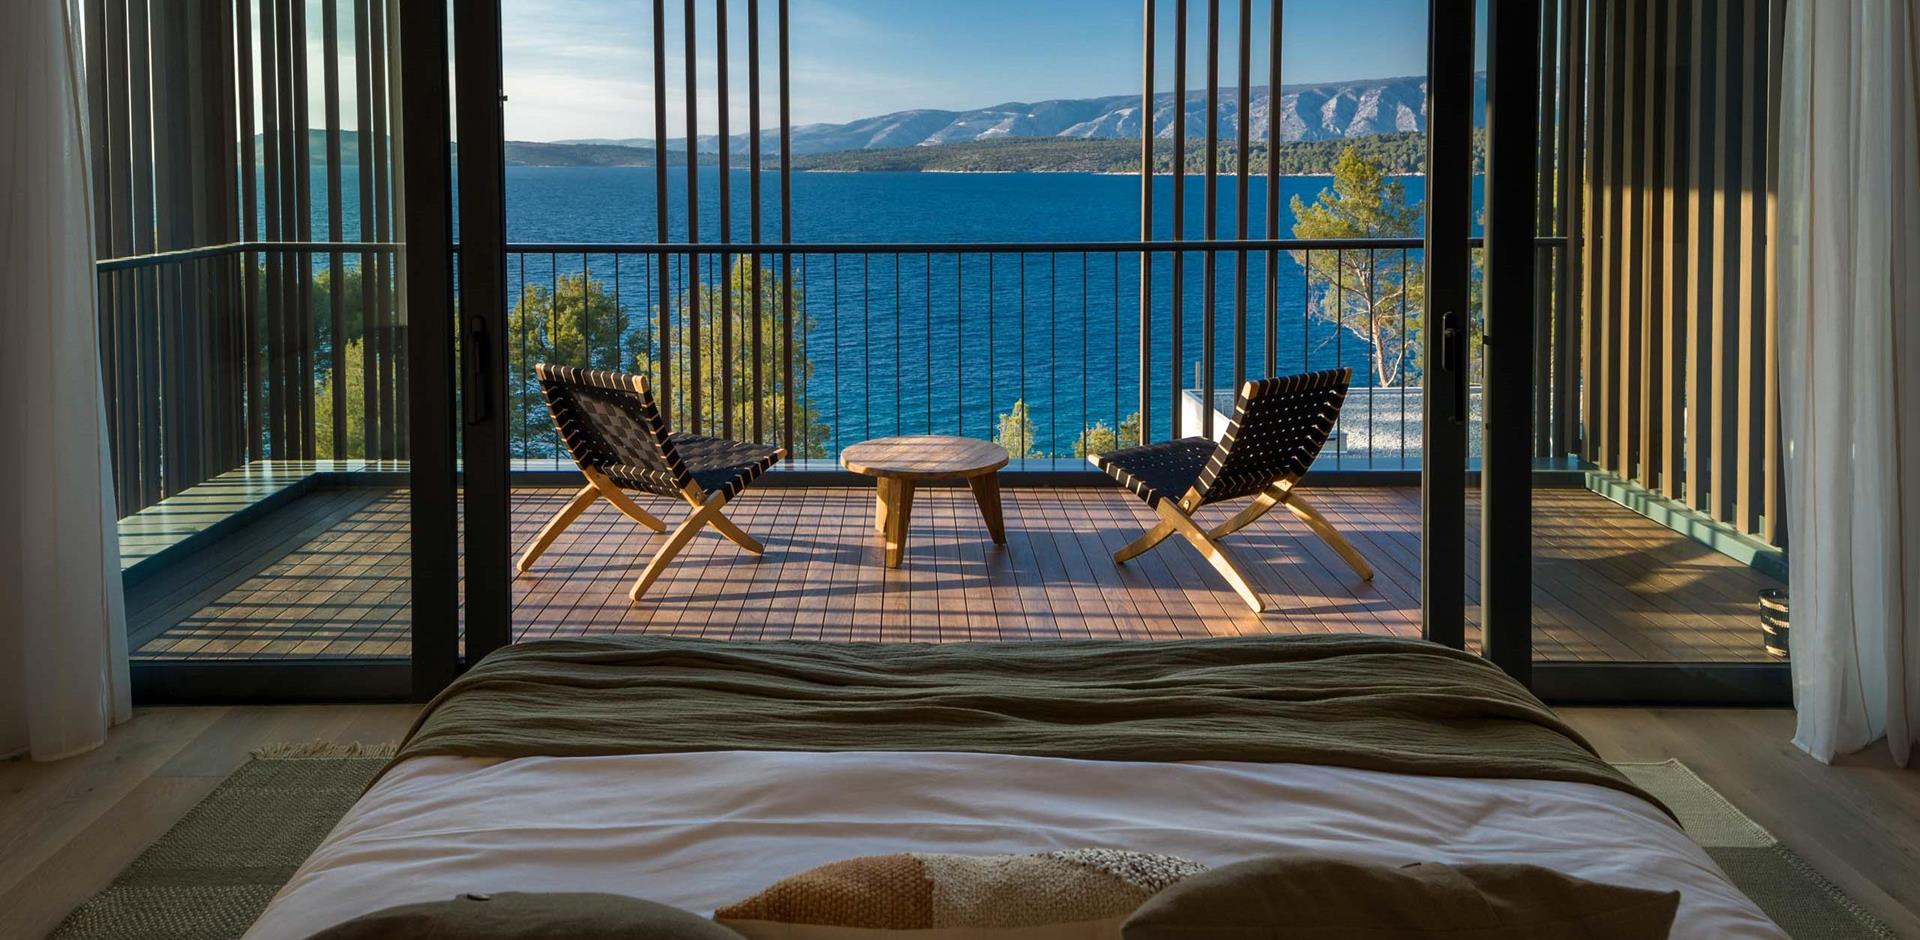 Bedroom, Maslina Resort, Istria, Croatia, Europe